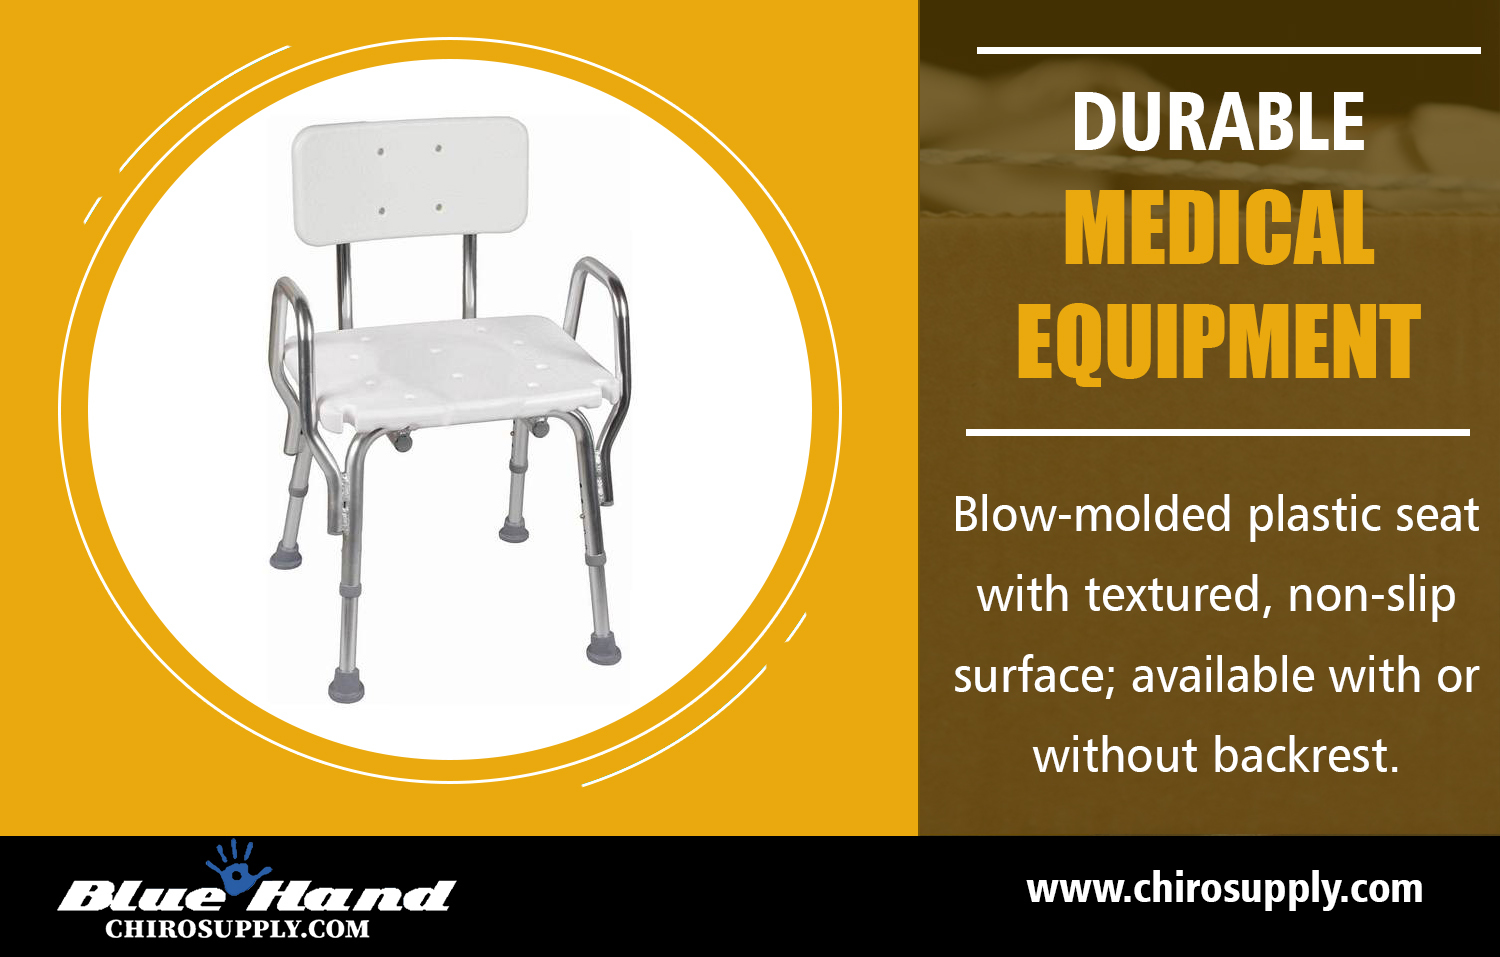 Durable Medical Equipment | 8775639660 | chirosupply.com